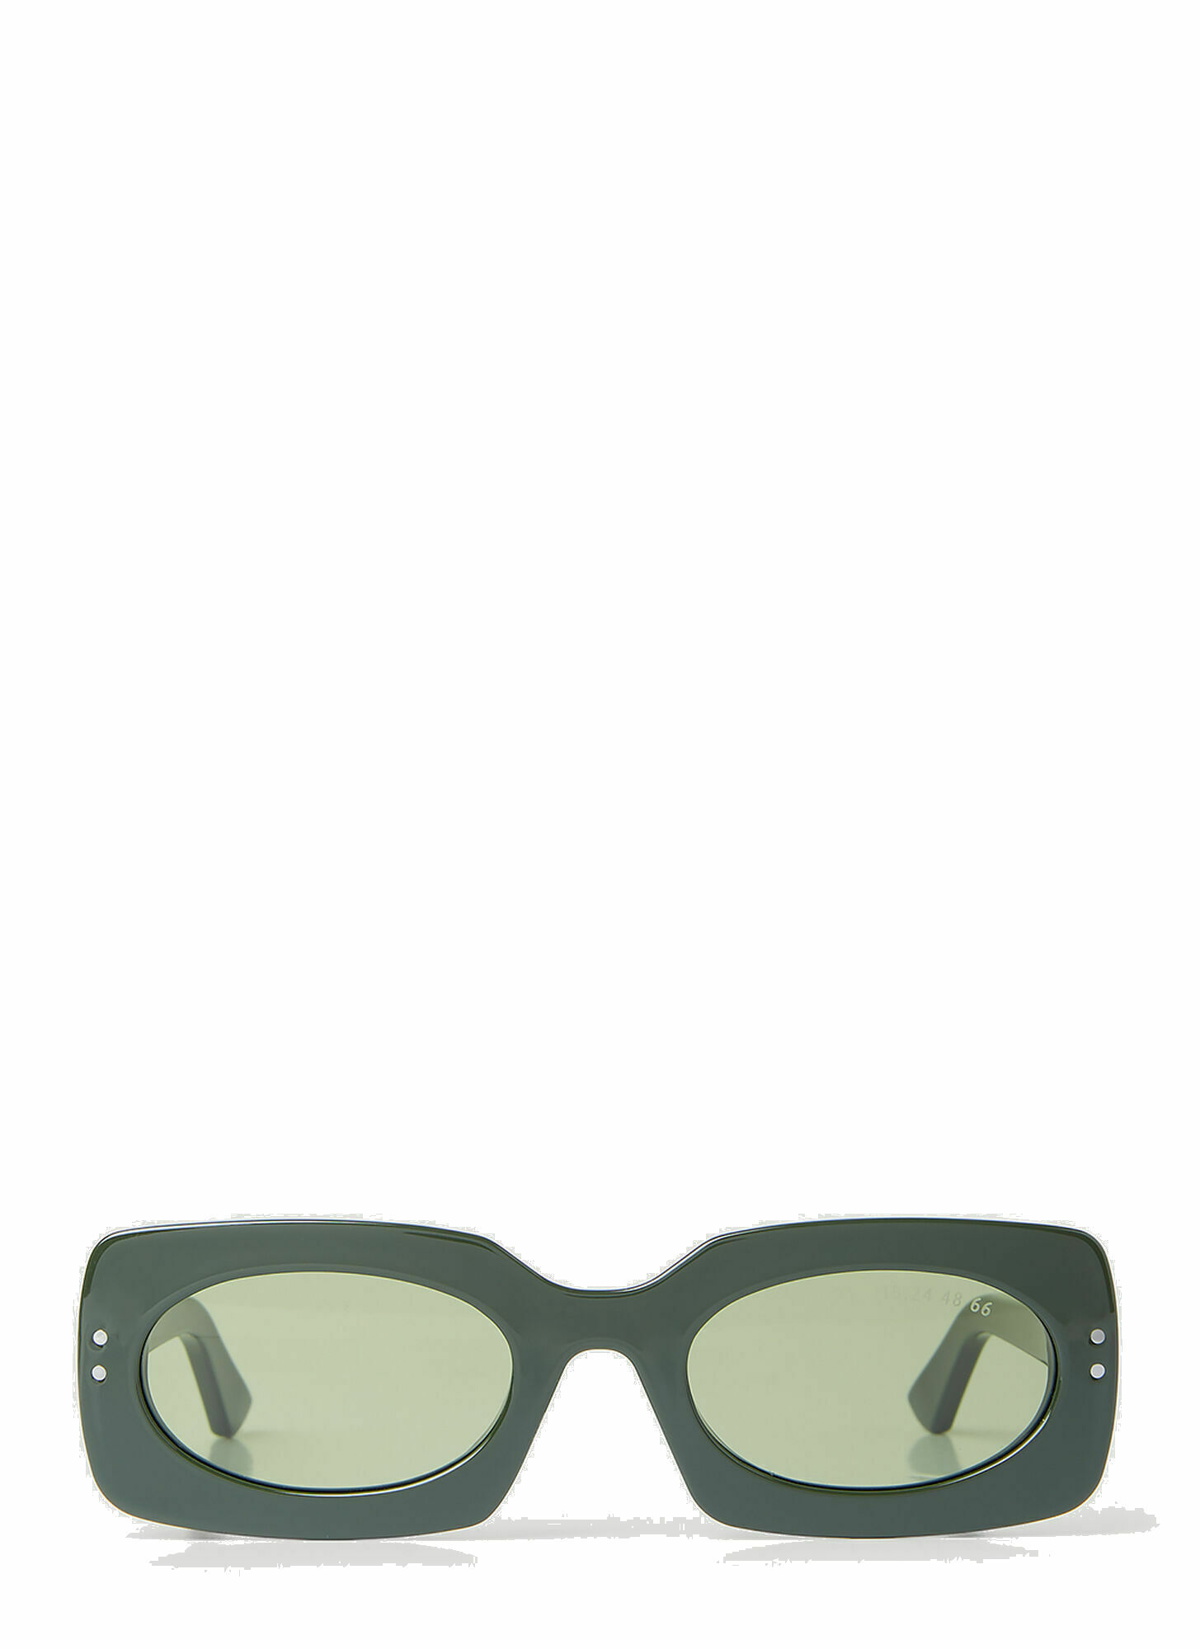 Photo: Clean Waves - Inez & Vinoodh Low Rectangle Sunglasses in Green